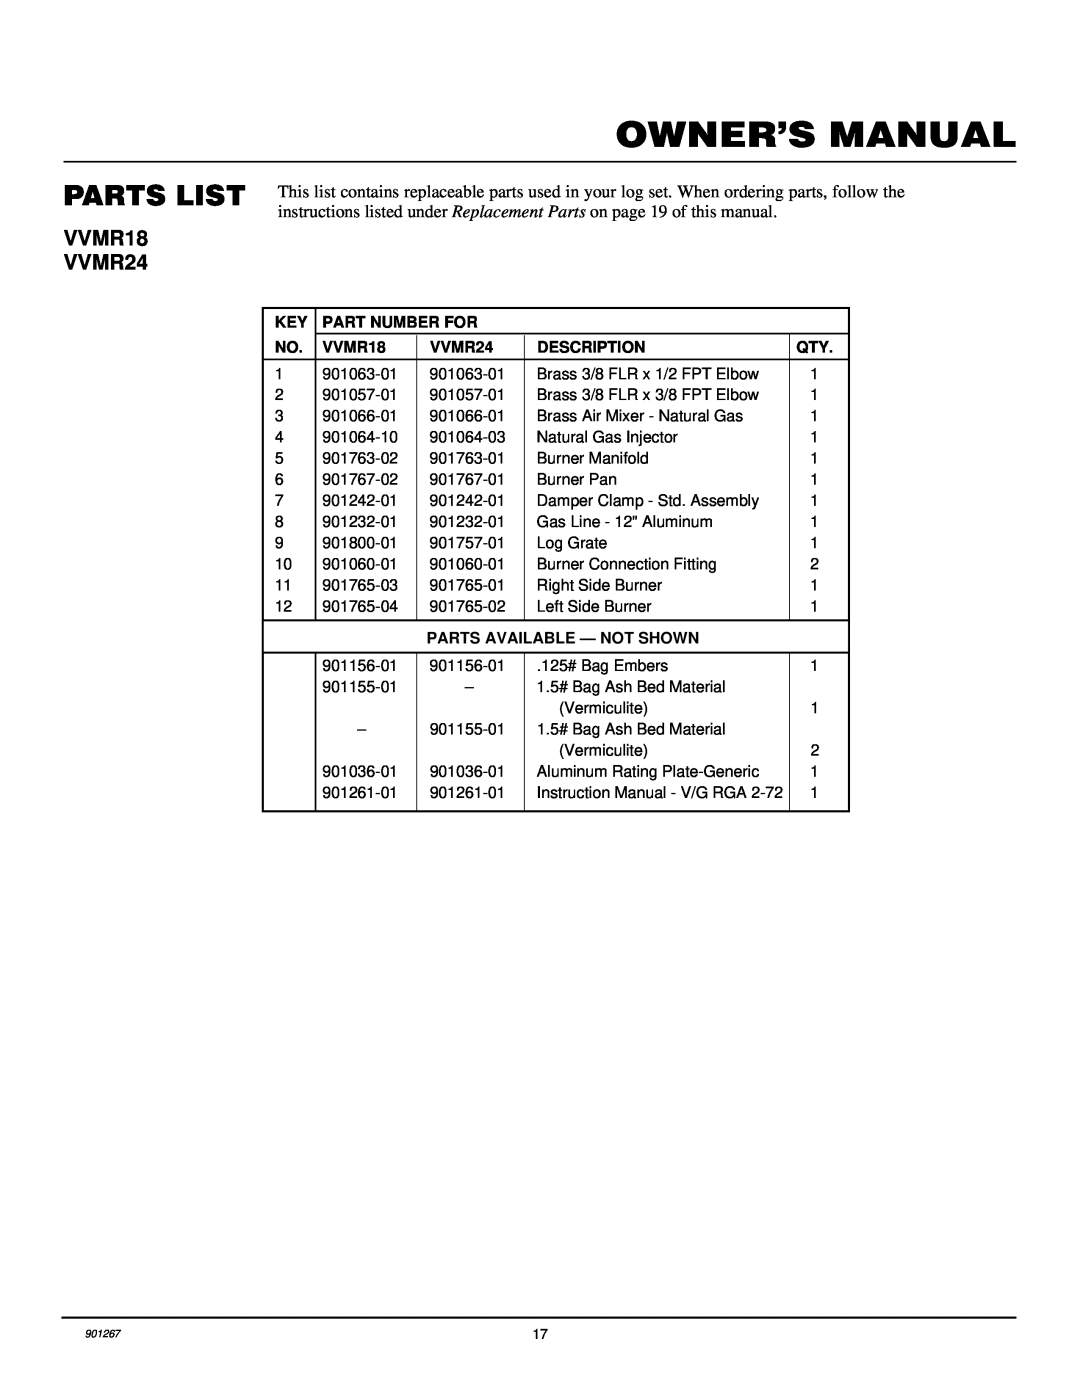 Desa VVMR18 installation manual Parts List, Part Number For, VVMR24, Description, Parts Available - Not Shown 